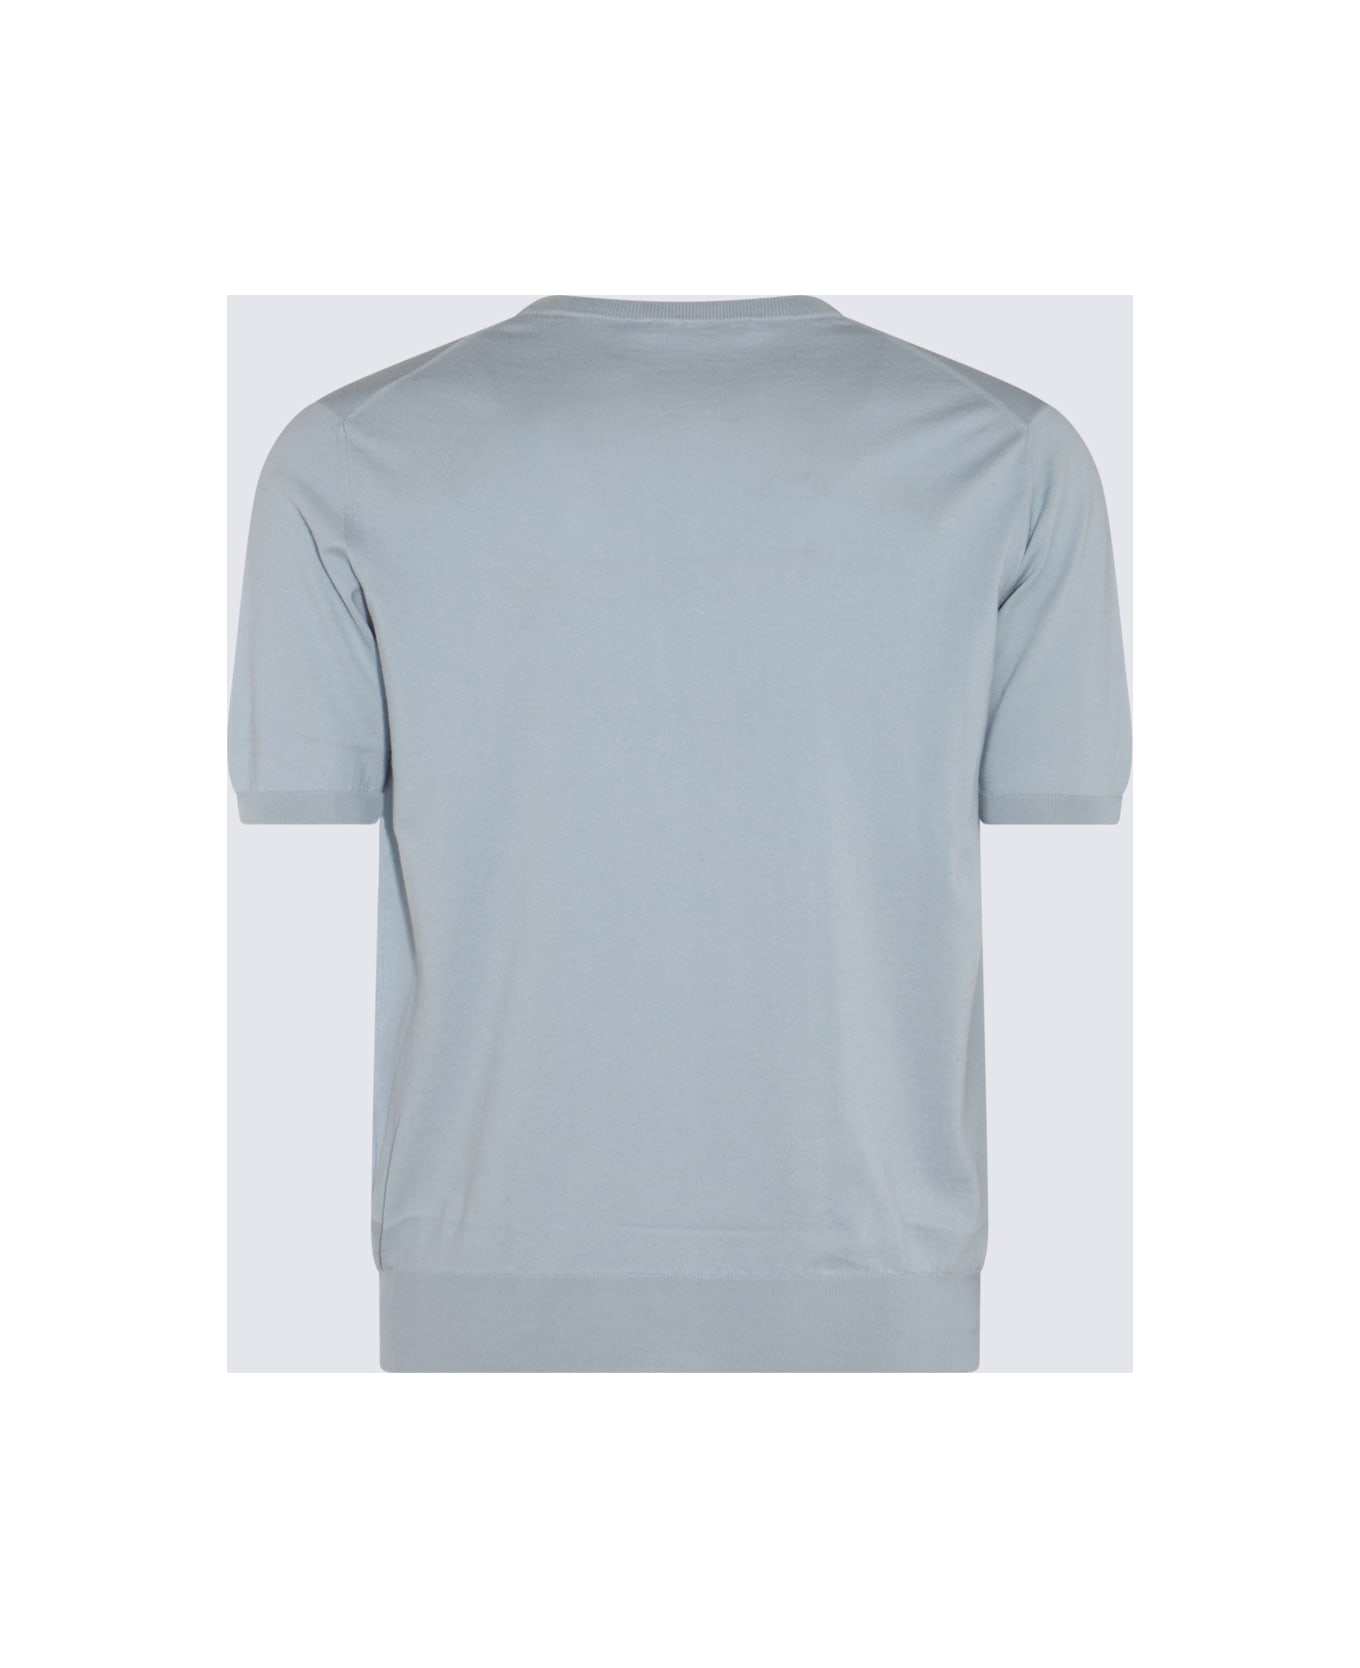 Cruciani Light Blue Cotton T-shirt - Cielo